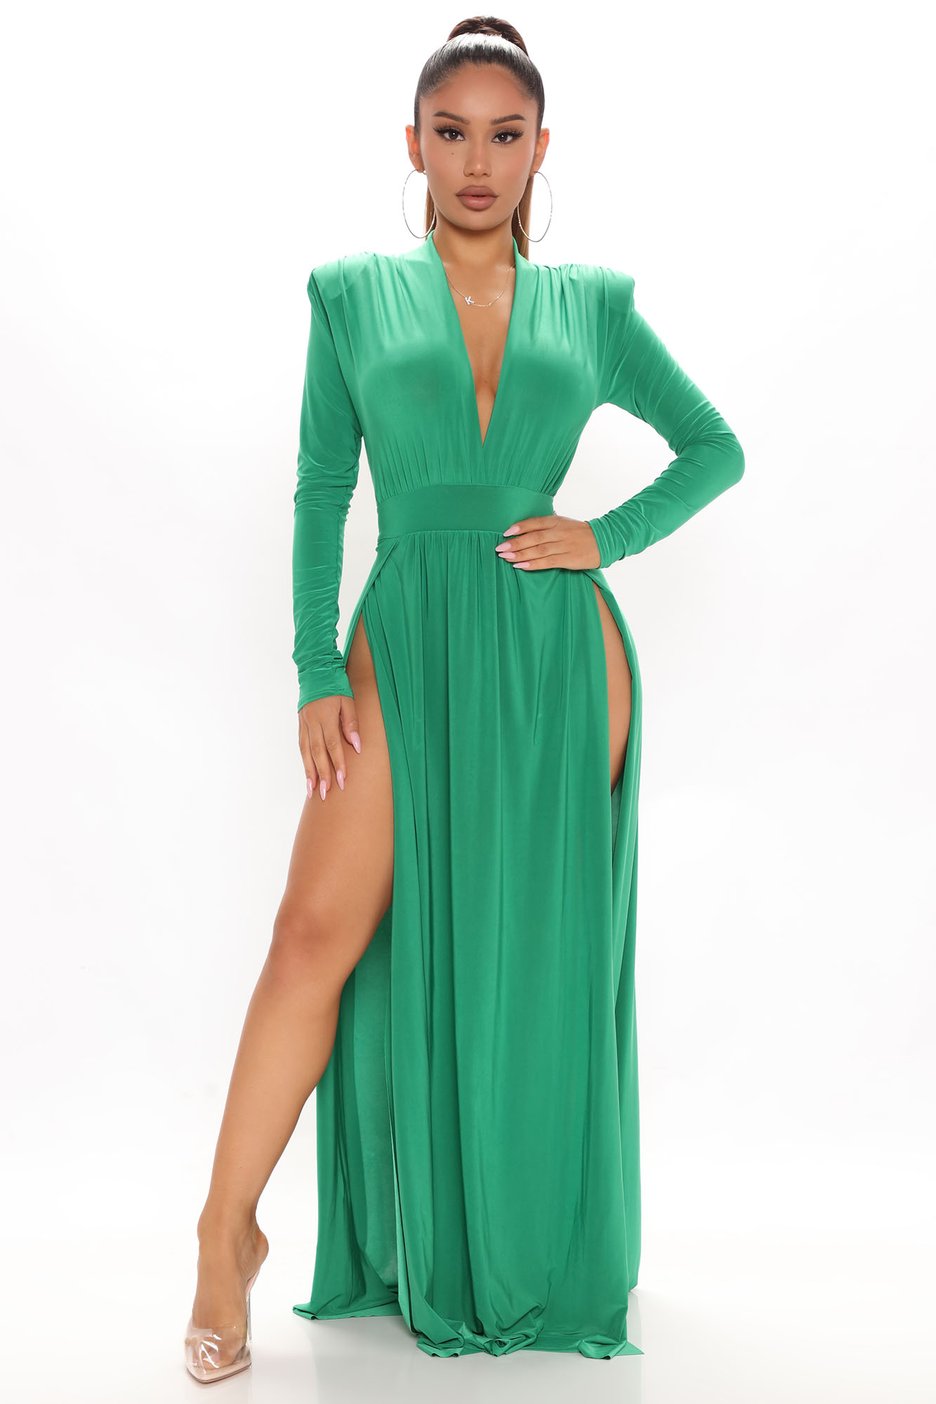 Emily B Rocks Fashion Nova Green V-Neck Maxi Dress to Jay-Z's 40/40 Club  Anniversary Party